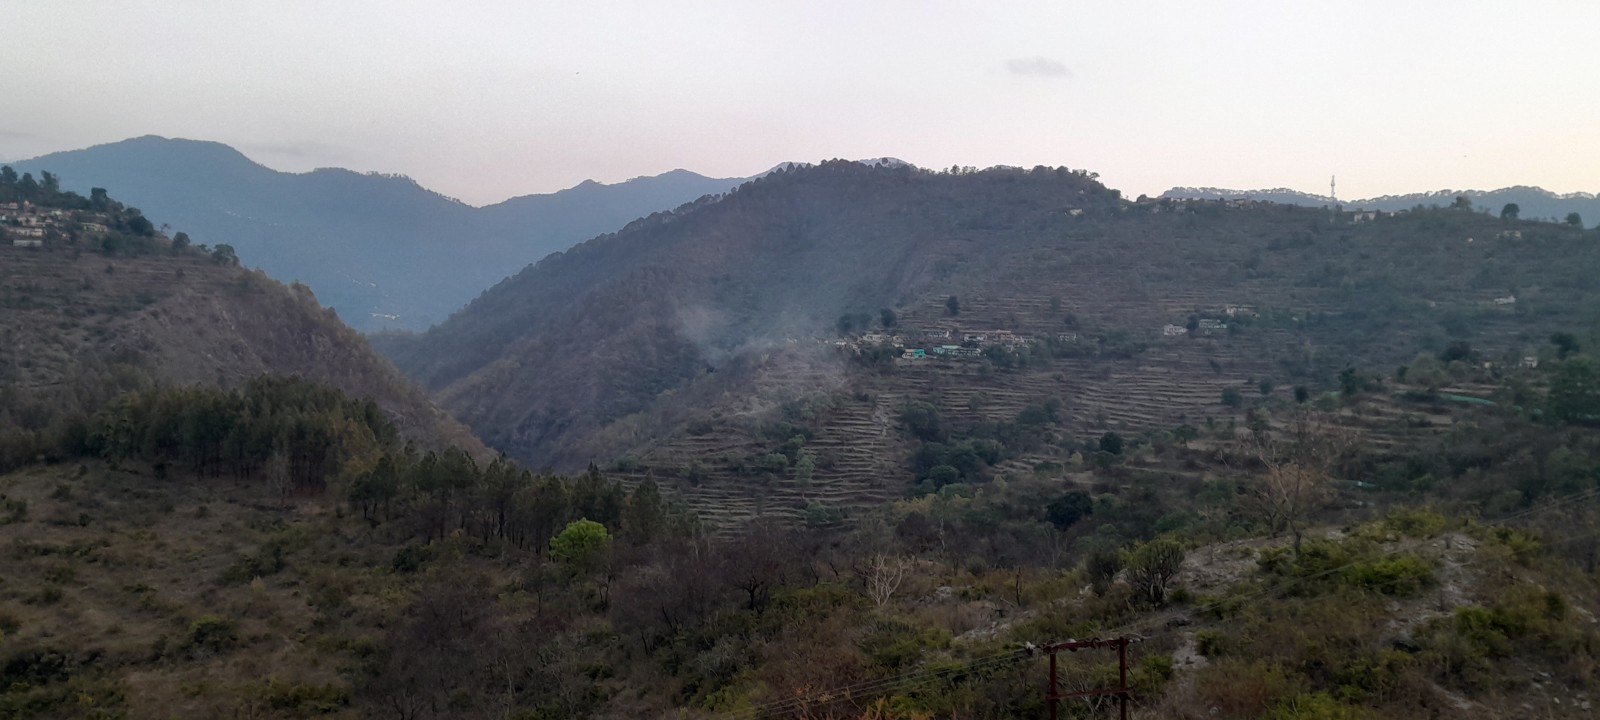 Daheli village, Pauri Garhwal